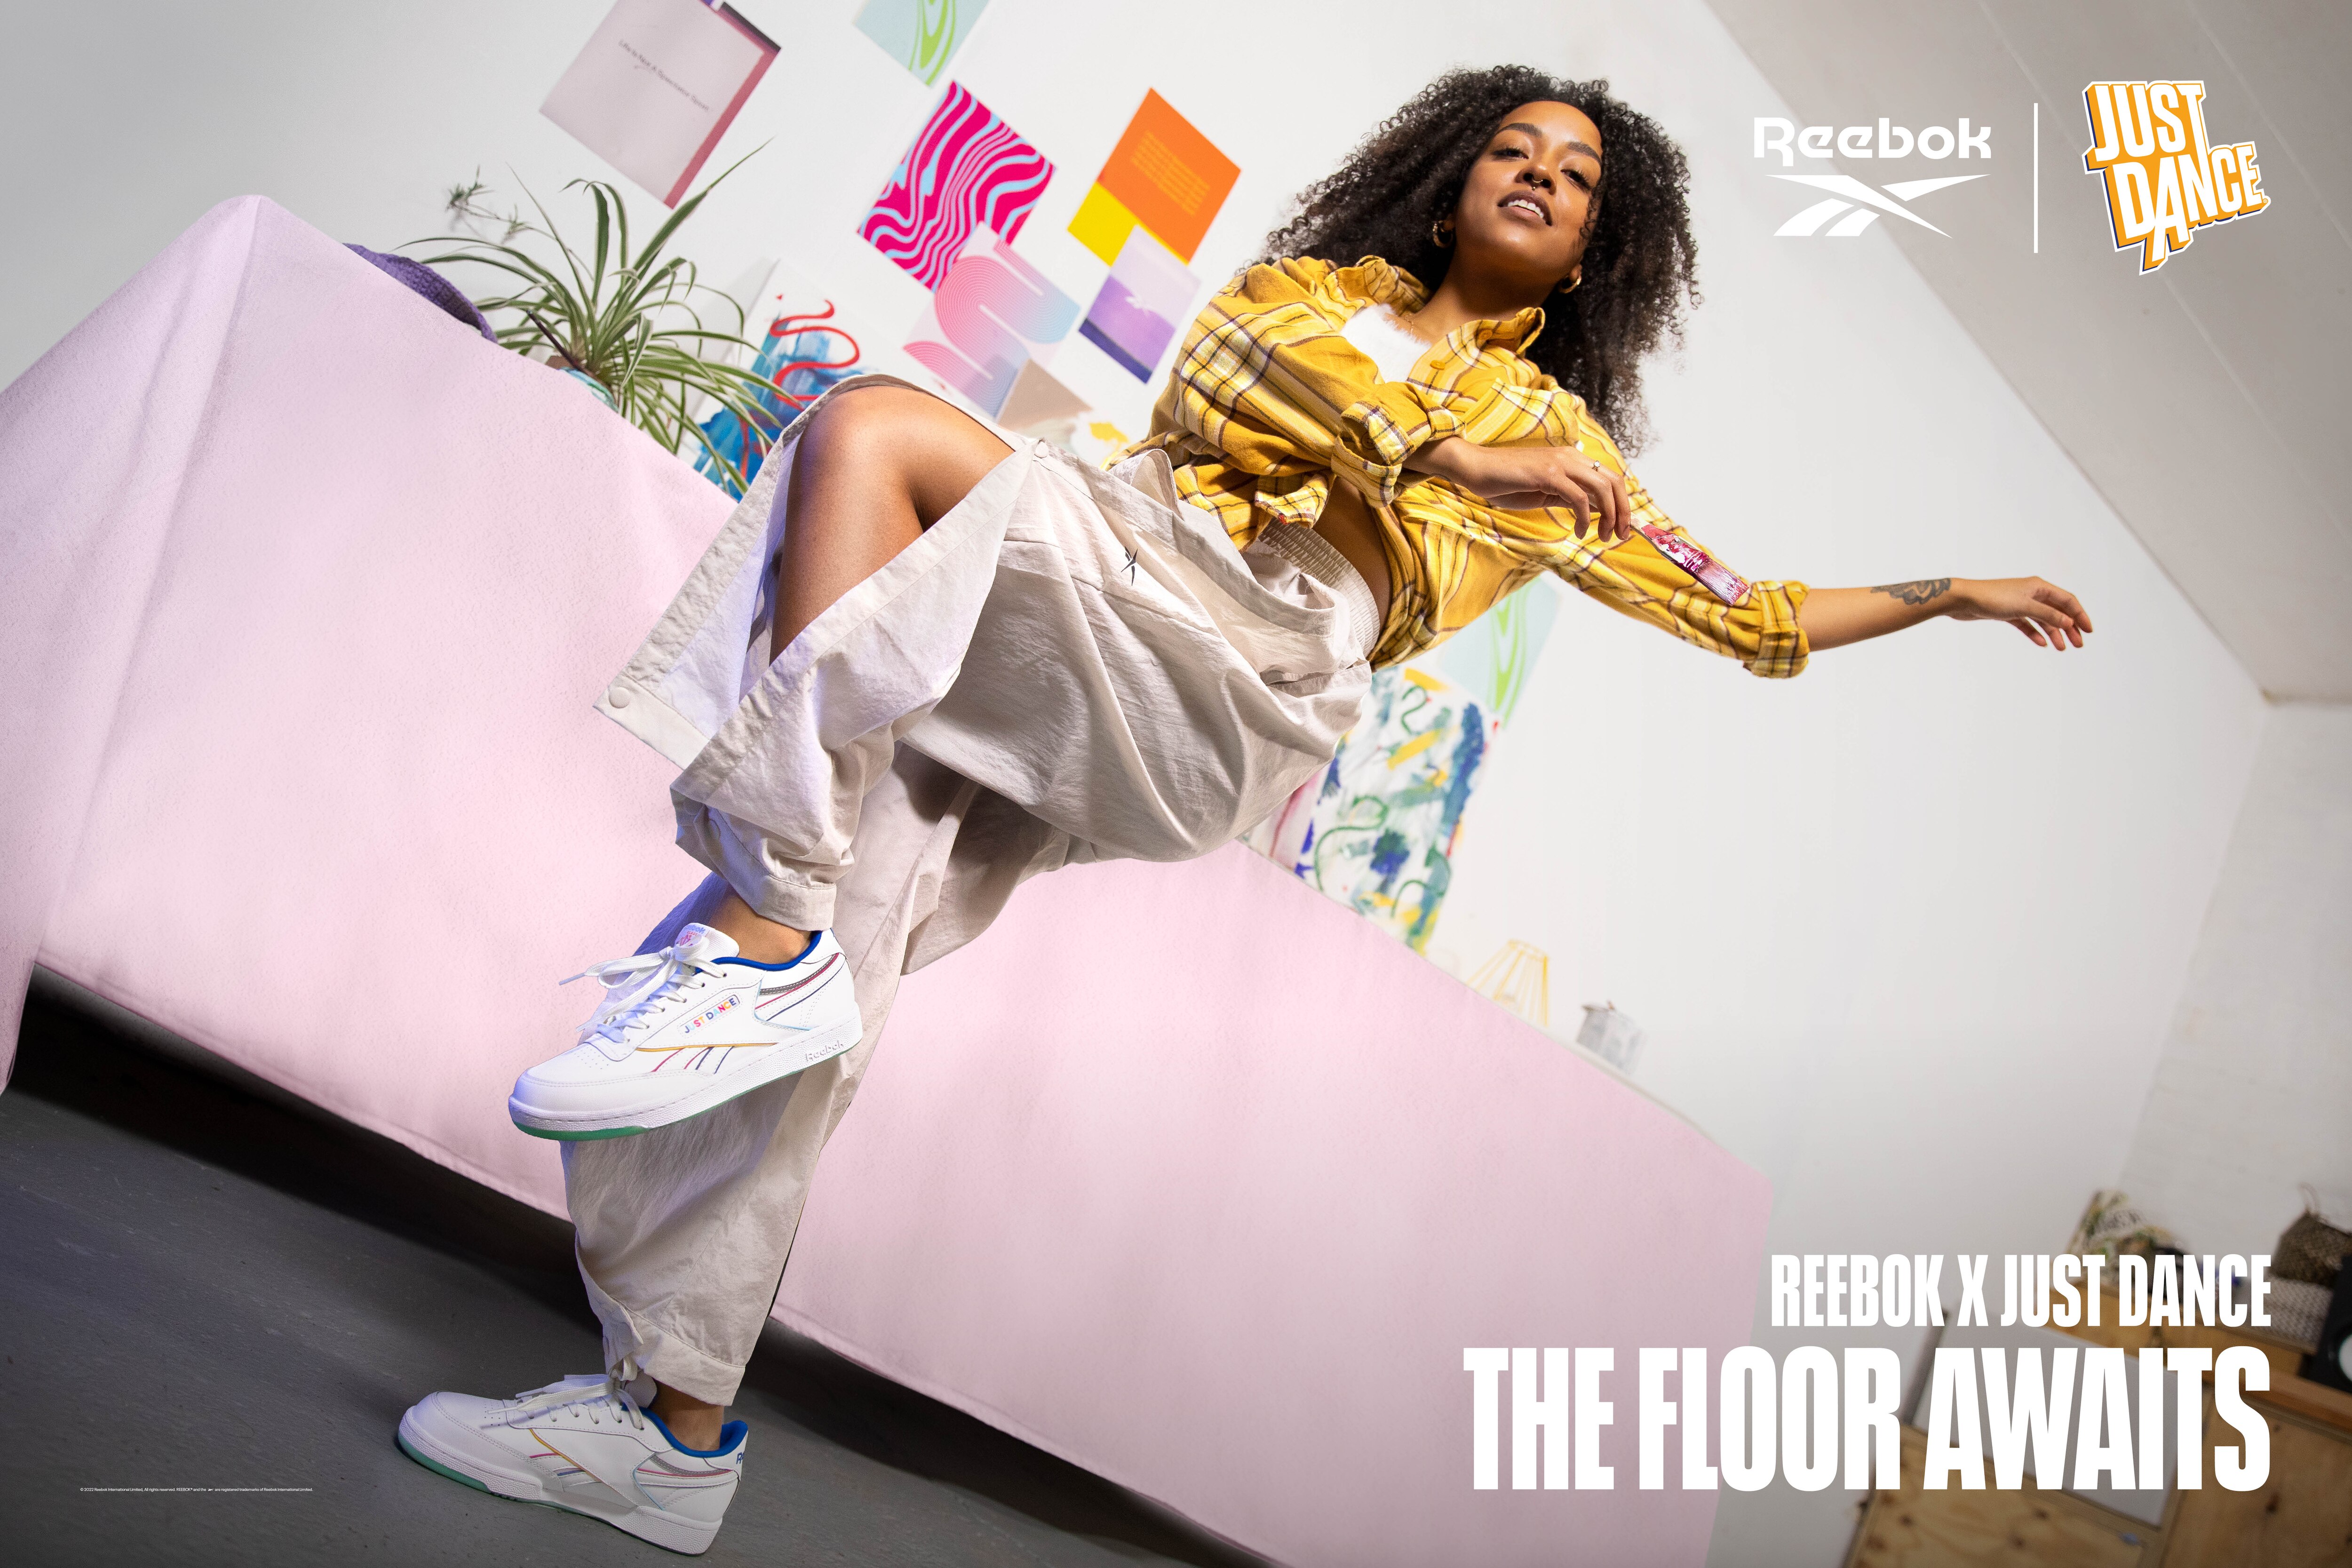 [Ubisoft News] [JD22] Reebok x Just Dance Footwear Collection - Club C